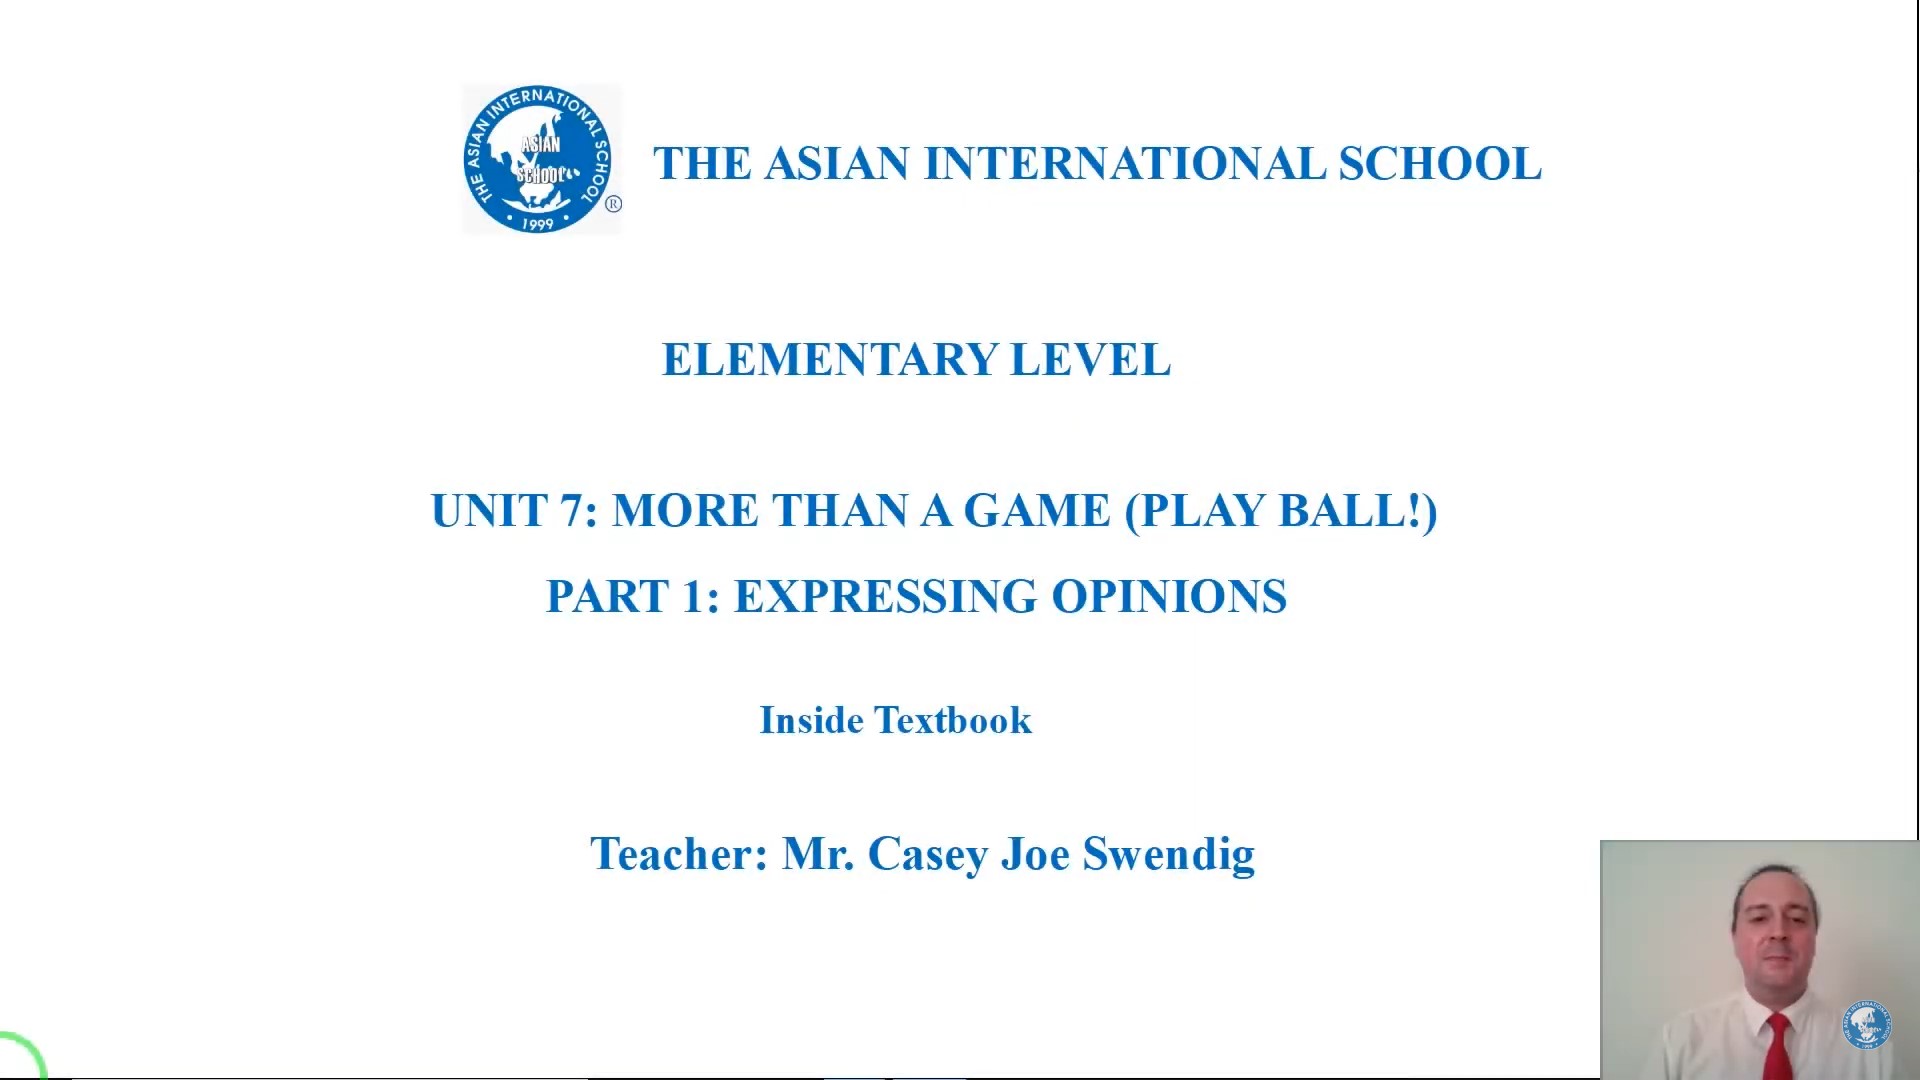 Unit 7: More than a game (Play ball) - Teacher: Mr. Casey Joe Swendig | Elementary level